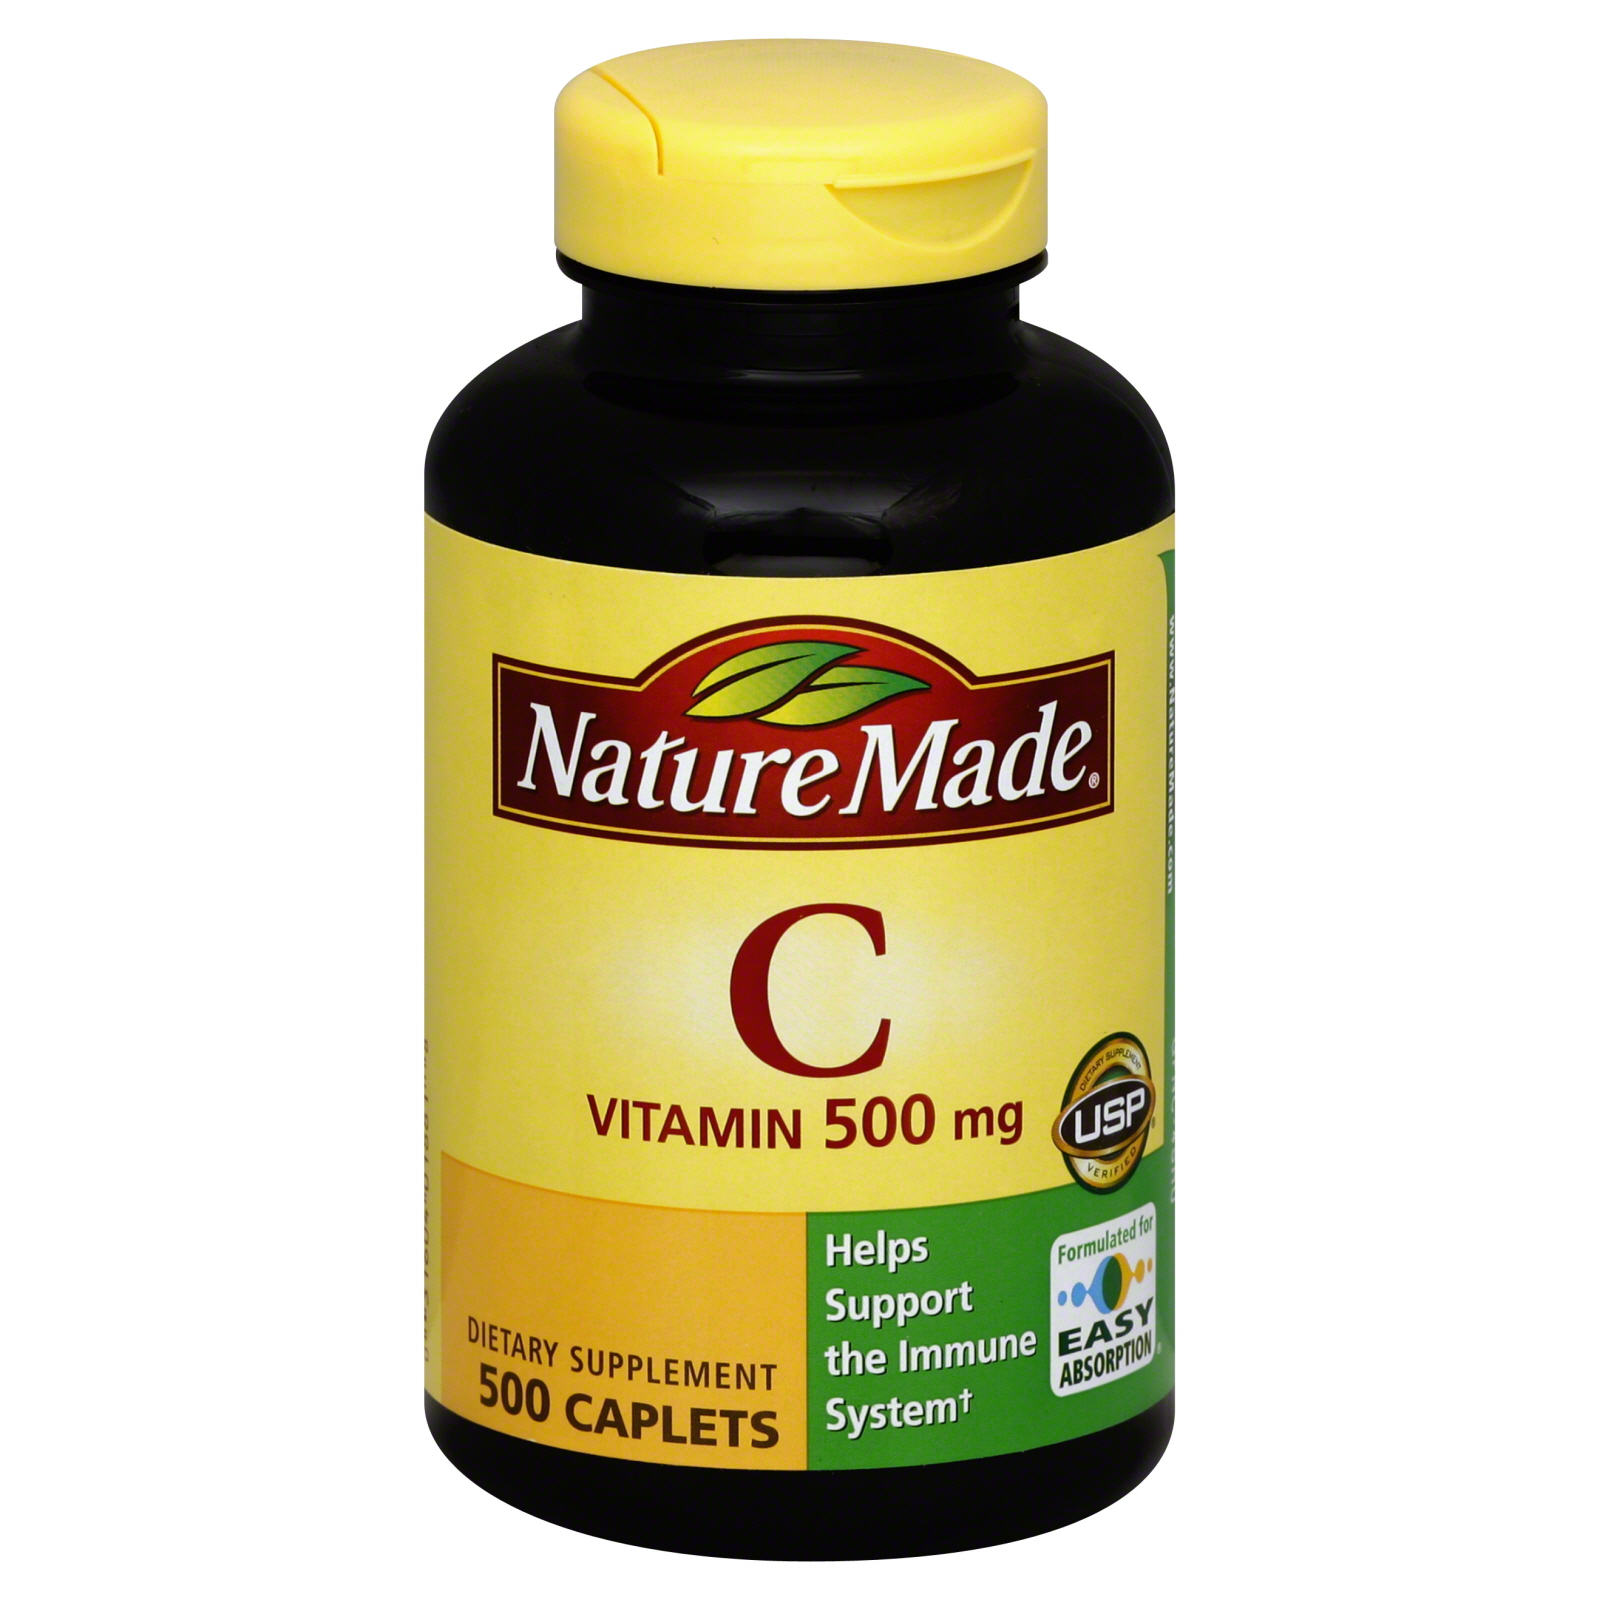 Nature Made Vitamin C, 500 mg, 500 Caplets